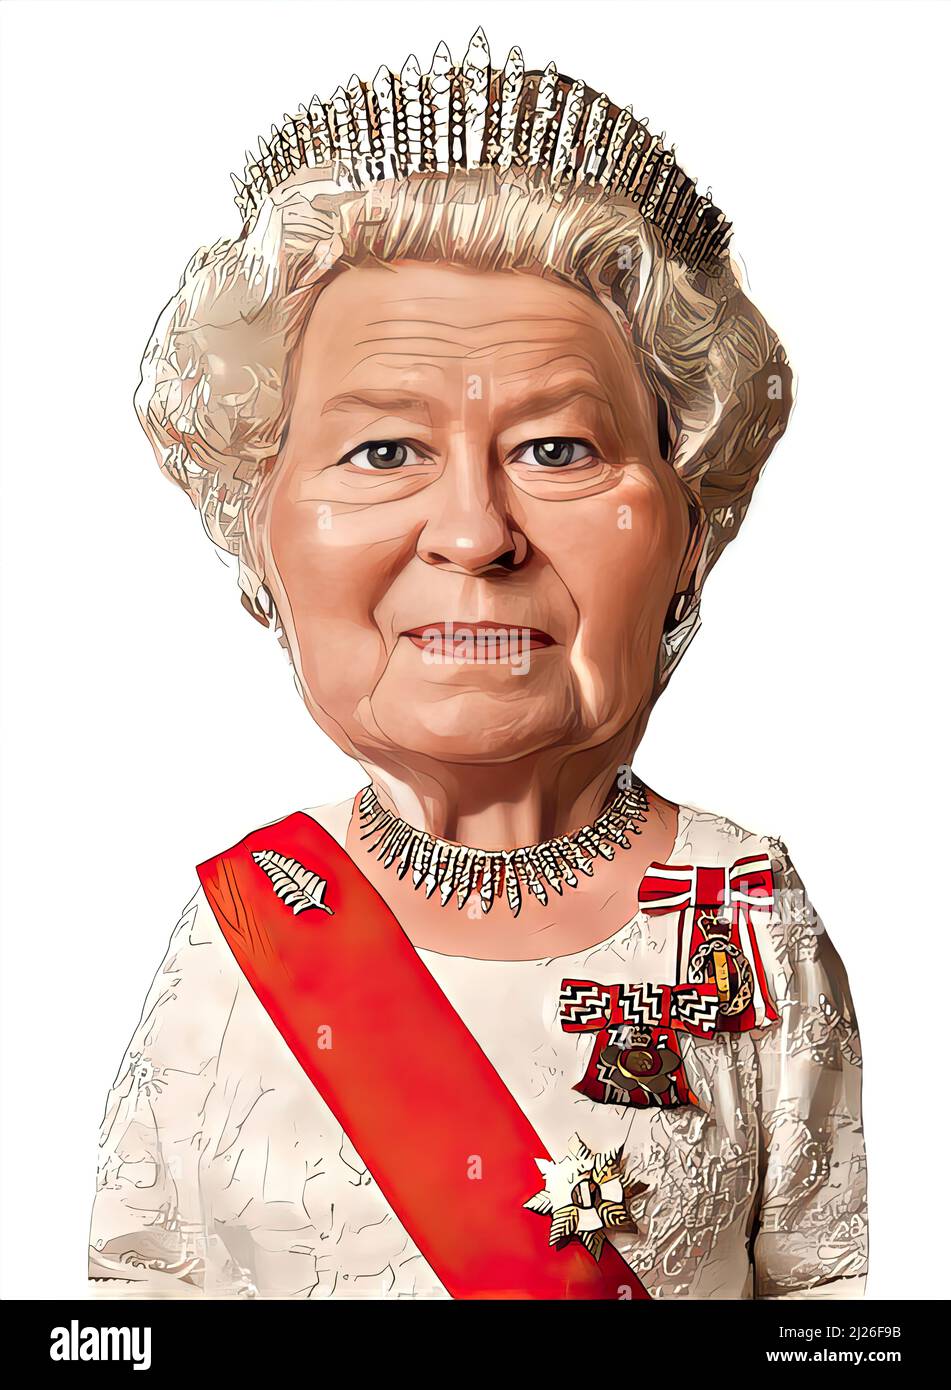 Queen Elizabeth II Windsor of United Kingdom, caricature face Stock Photo